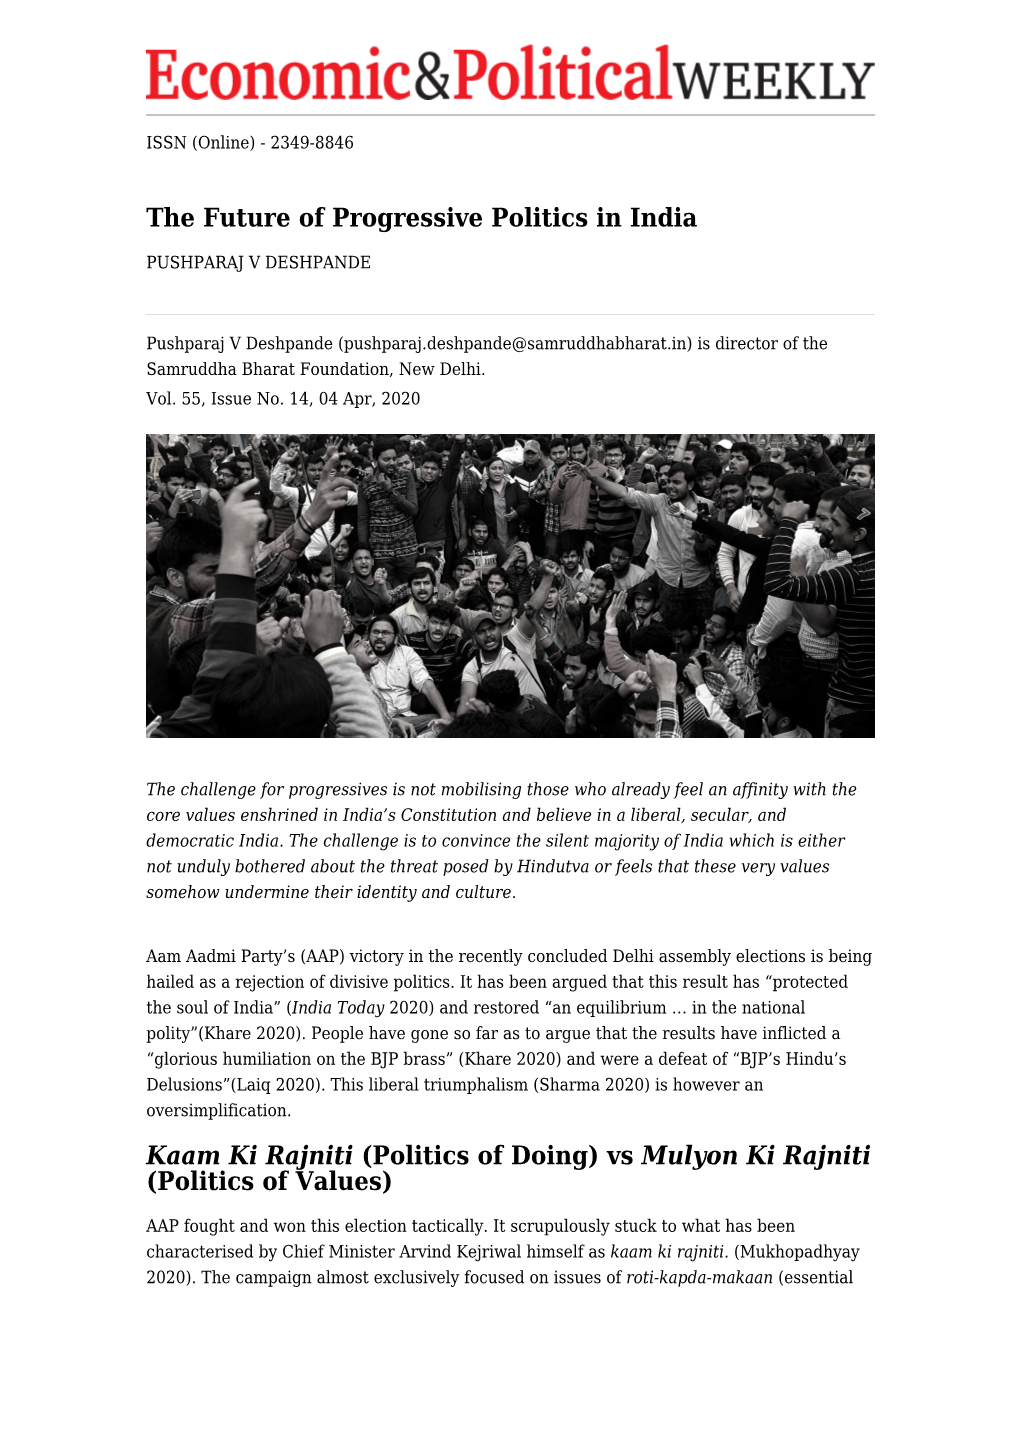 The Future of Progressive Politics in India Kaam Ki Rajniti (Politics Of